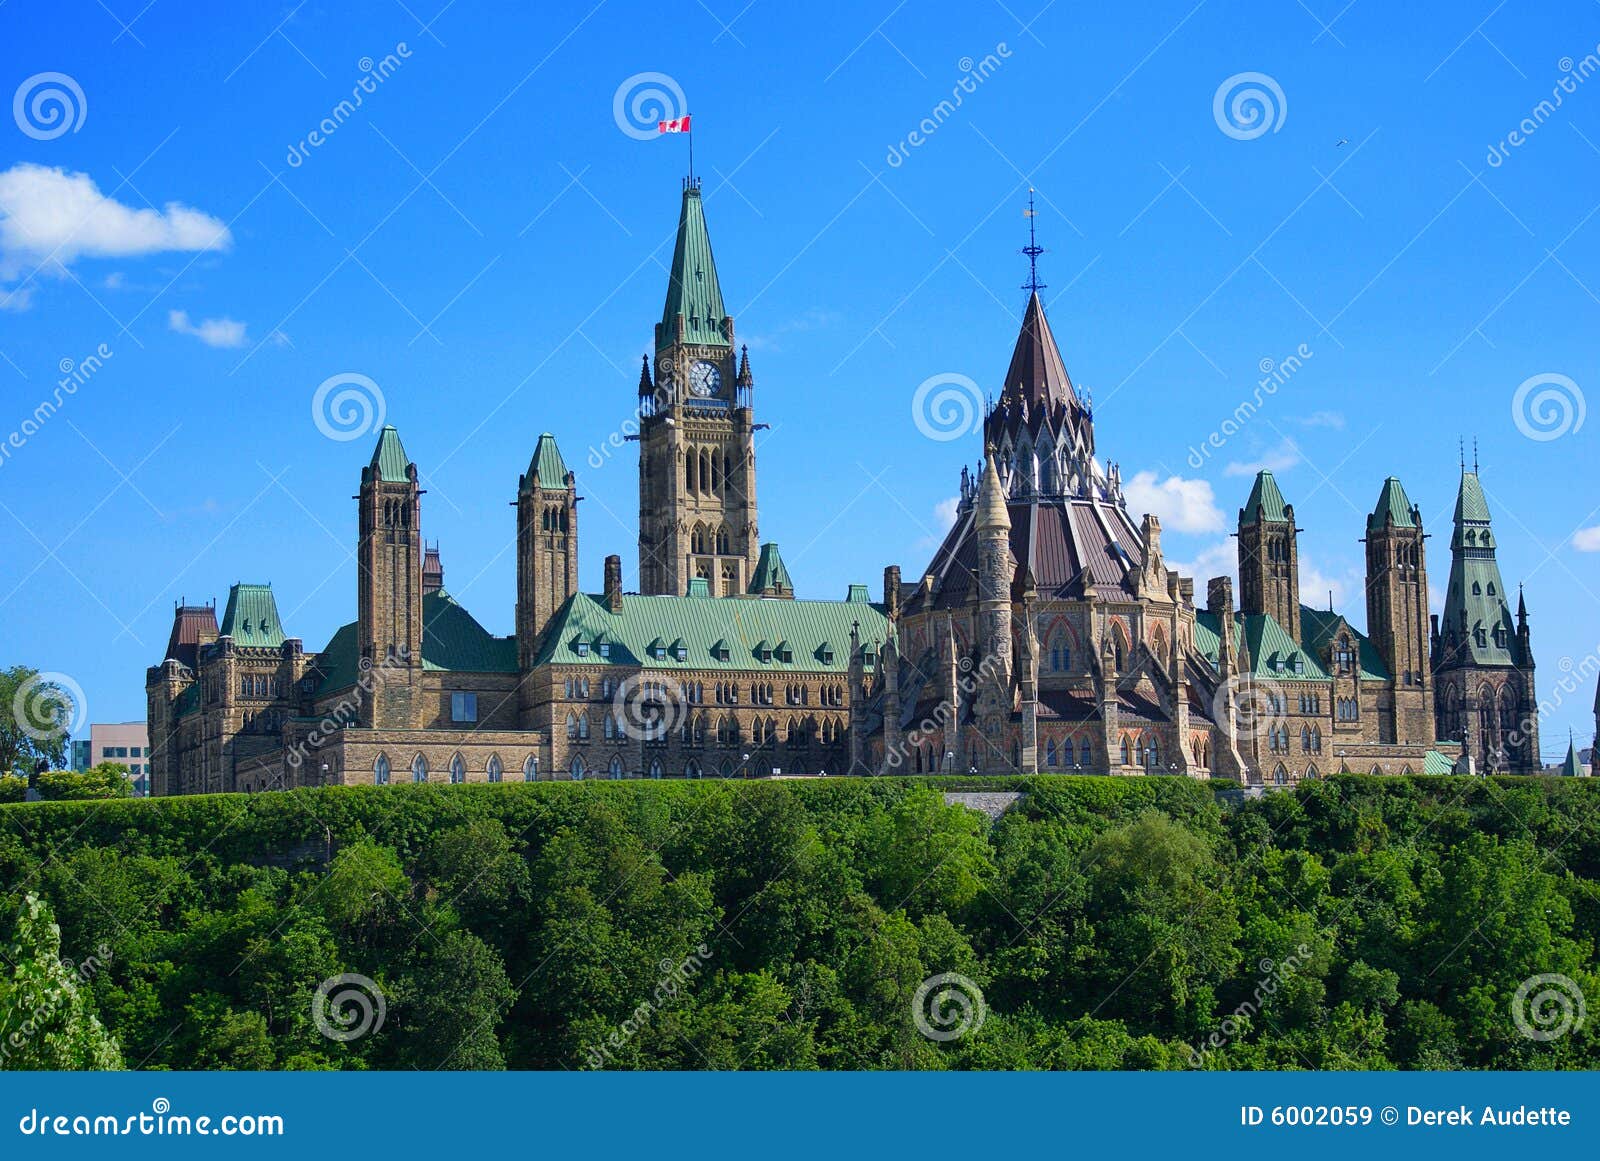 canada's parliament buildings